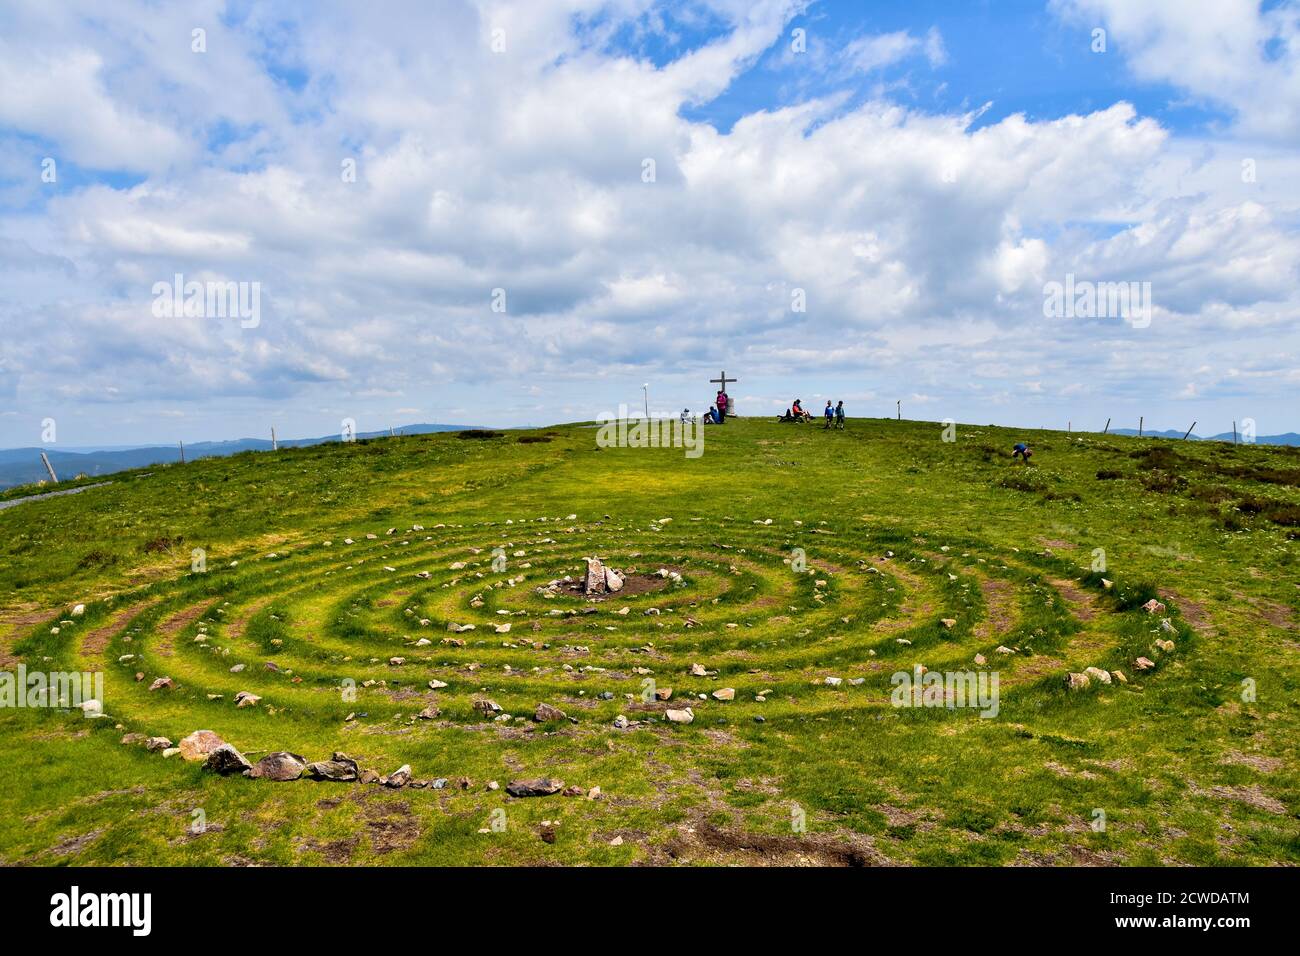 Magica spirale celtica di vita fatta di rocce in natura. Foto Stock